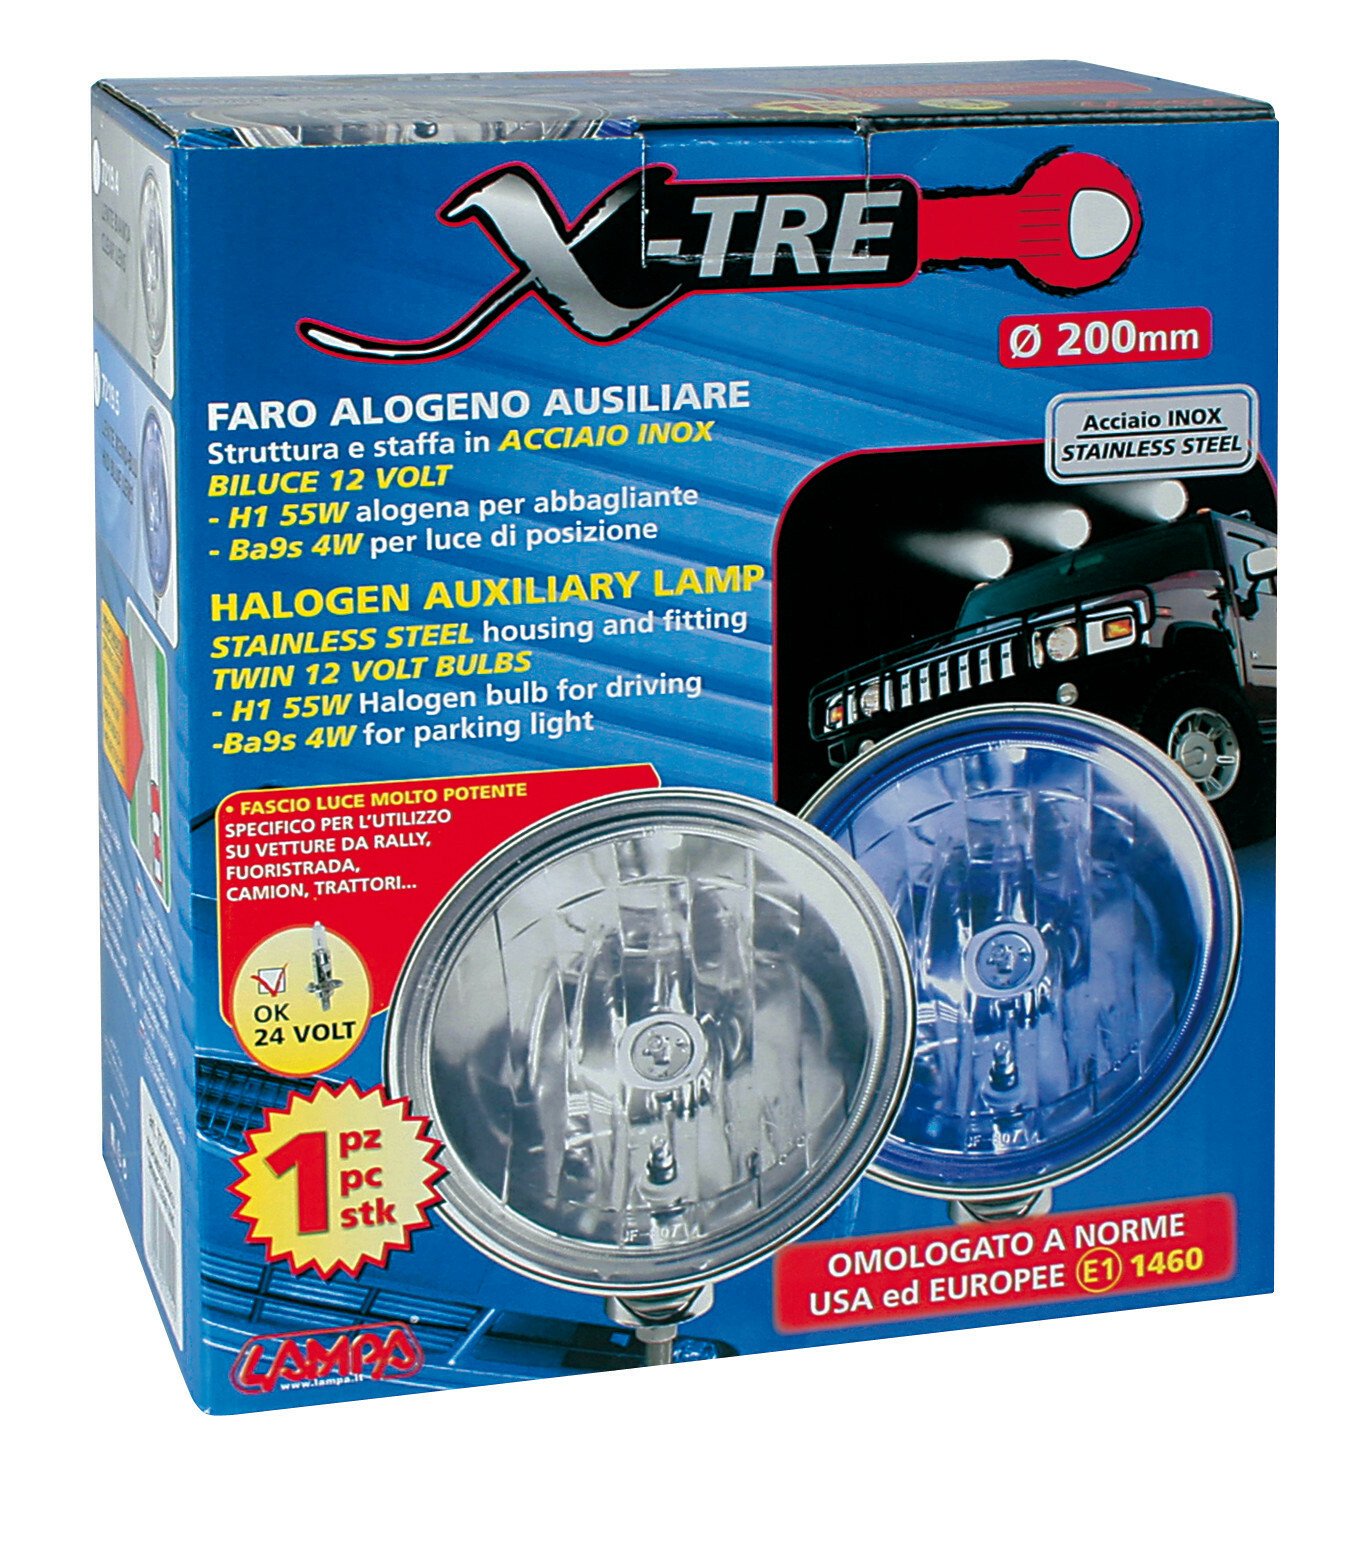 X-Tre inox ködlámpa - 1 darabos - Kék thumb